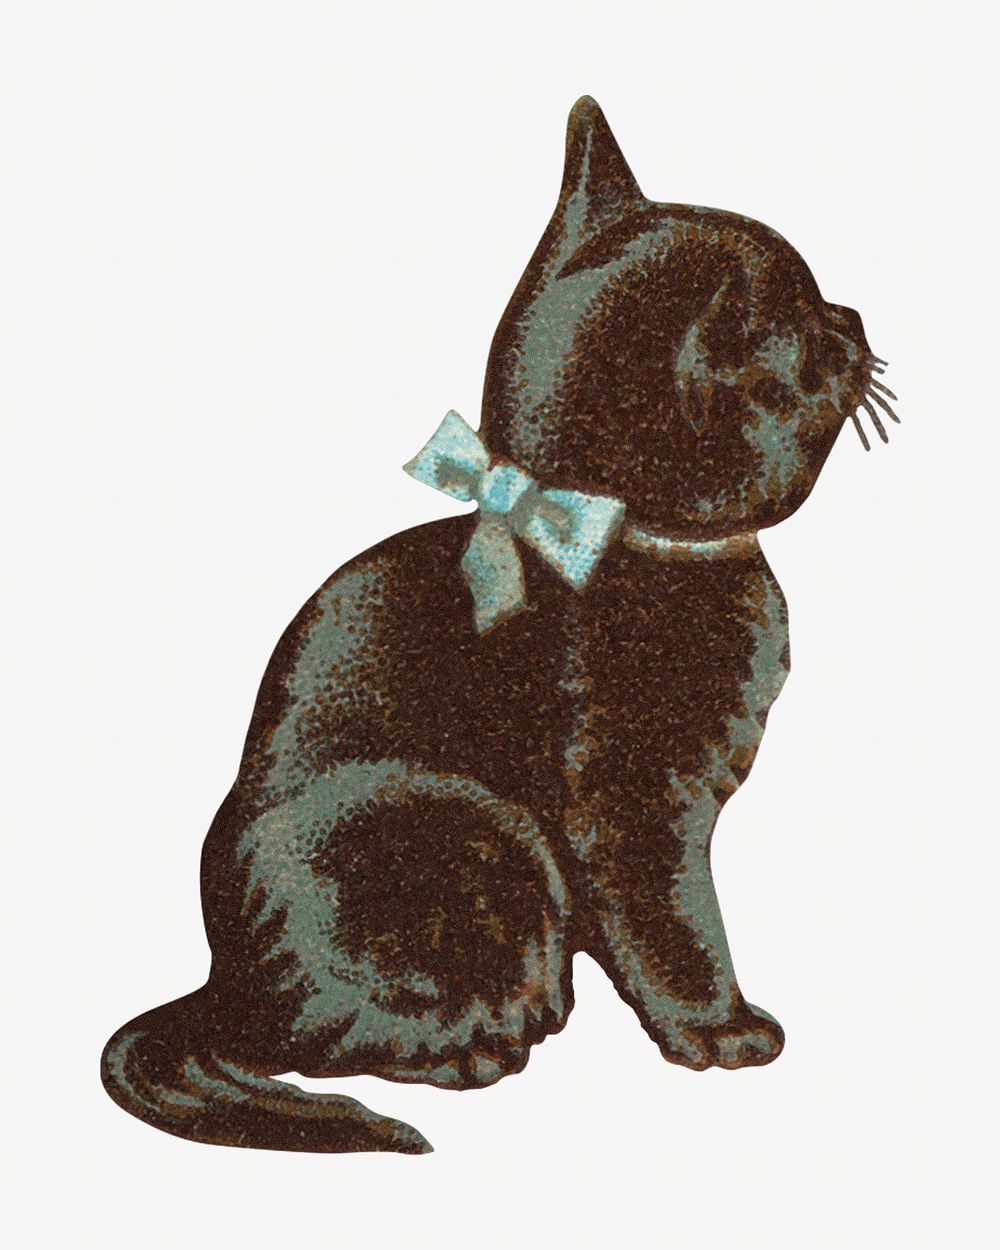 Little kitten, vintage pet animal illustration. Remixed by rawpixel.